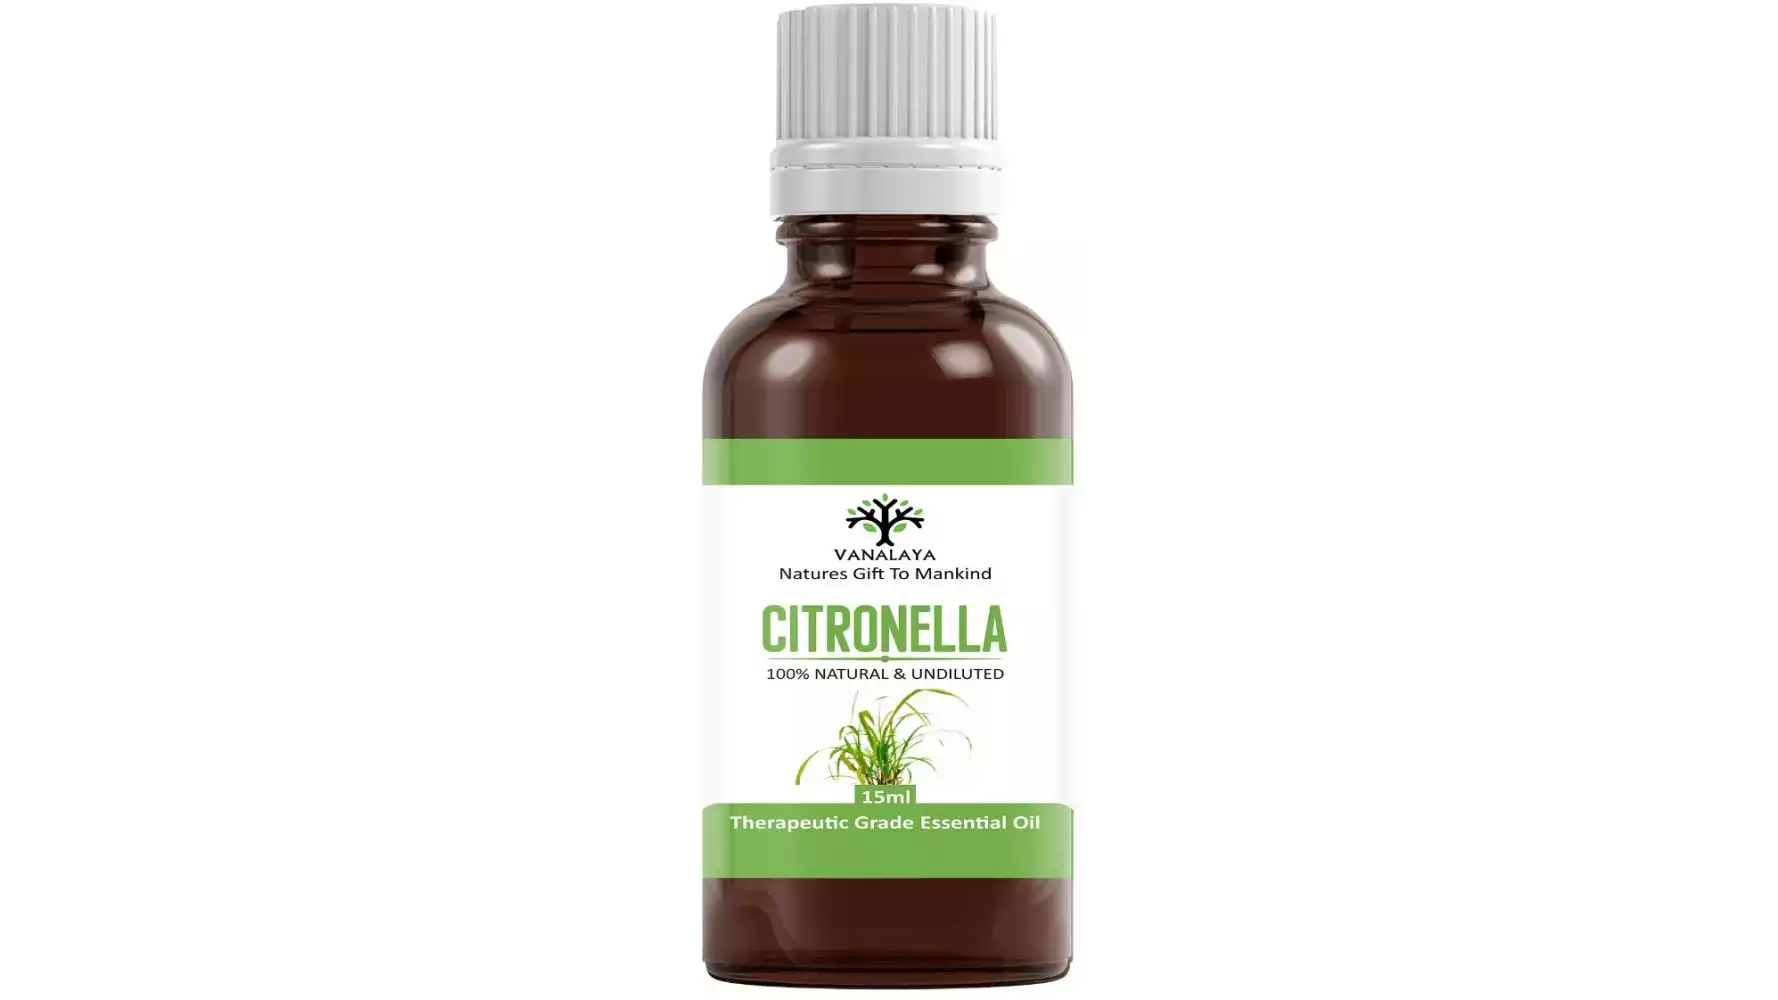 Vanalaya Citronella Essential Oil (15ml)